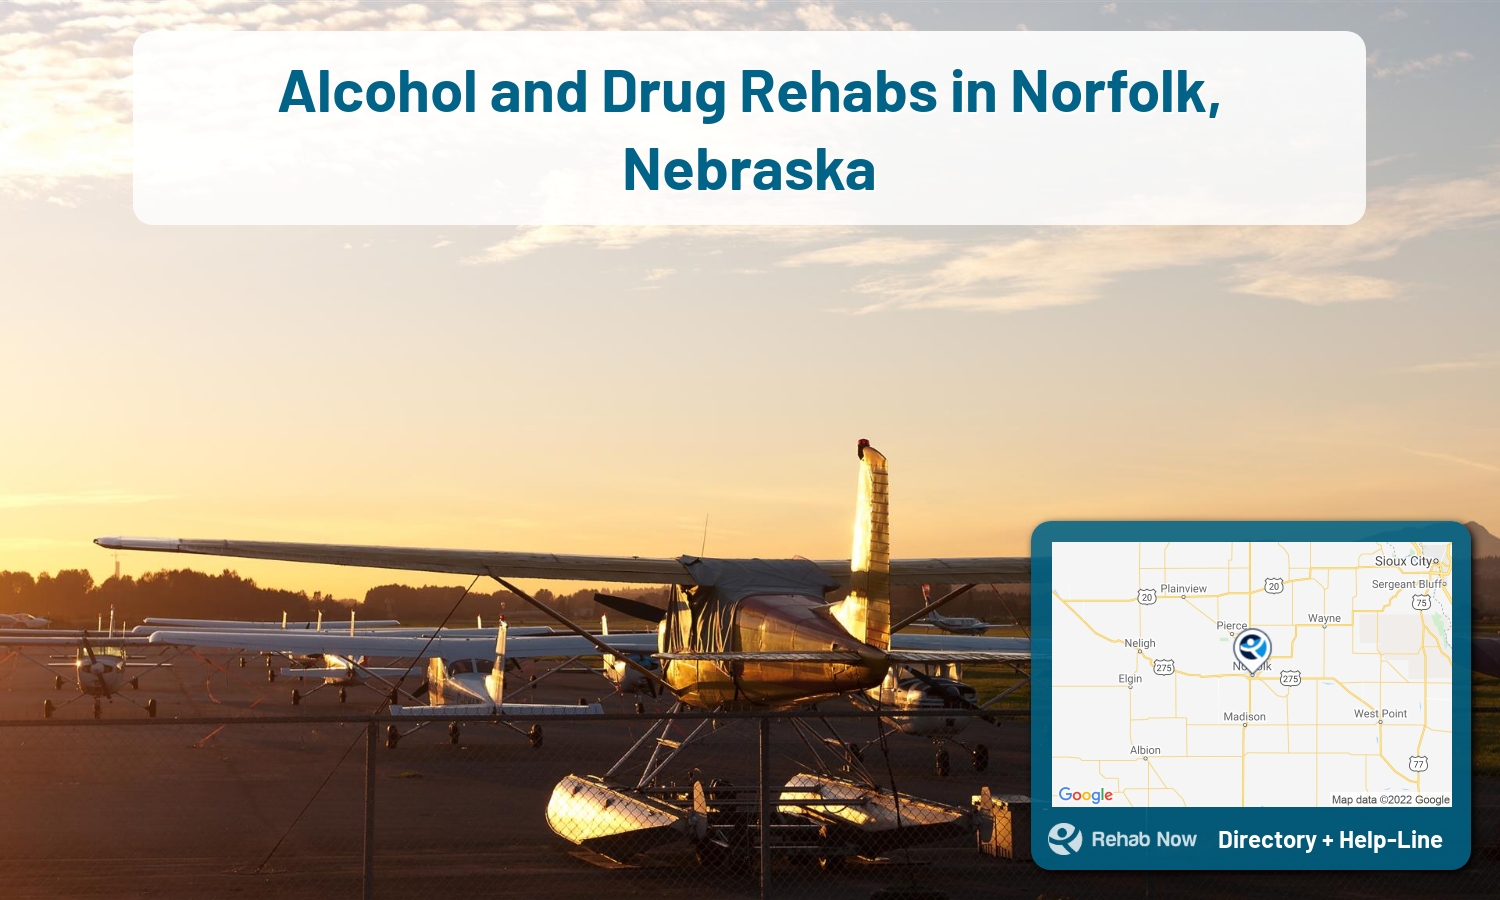 Norfolk, NE Treatment Centers. Find drug rehab in Norfolk, Nebraska, or detox and treatment programs. Get the right help now!